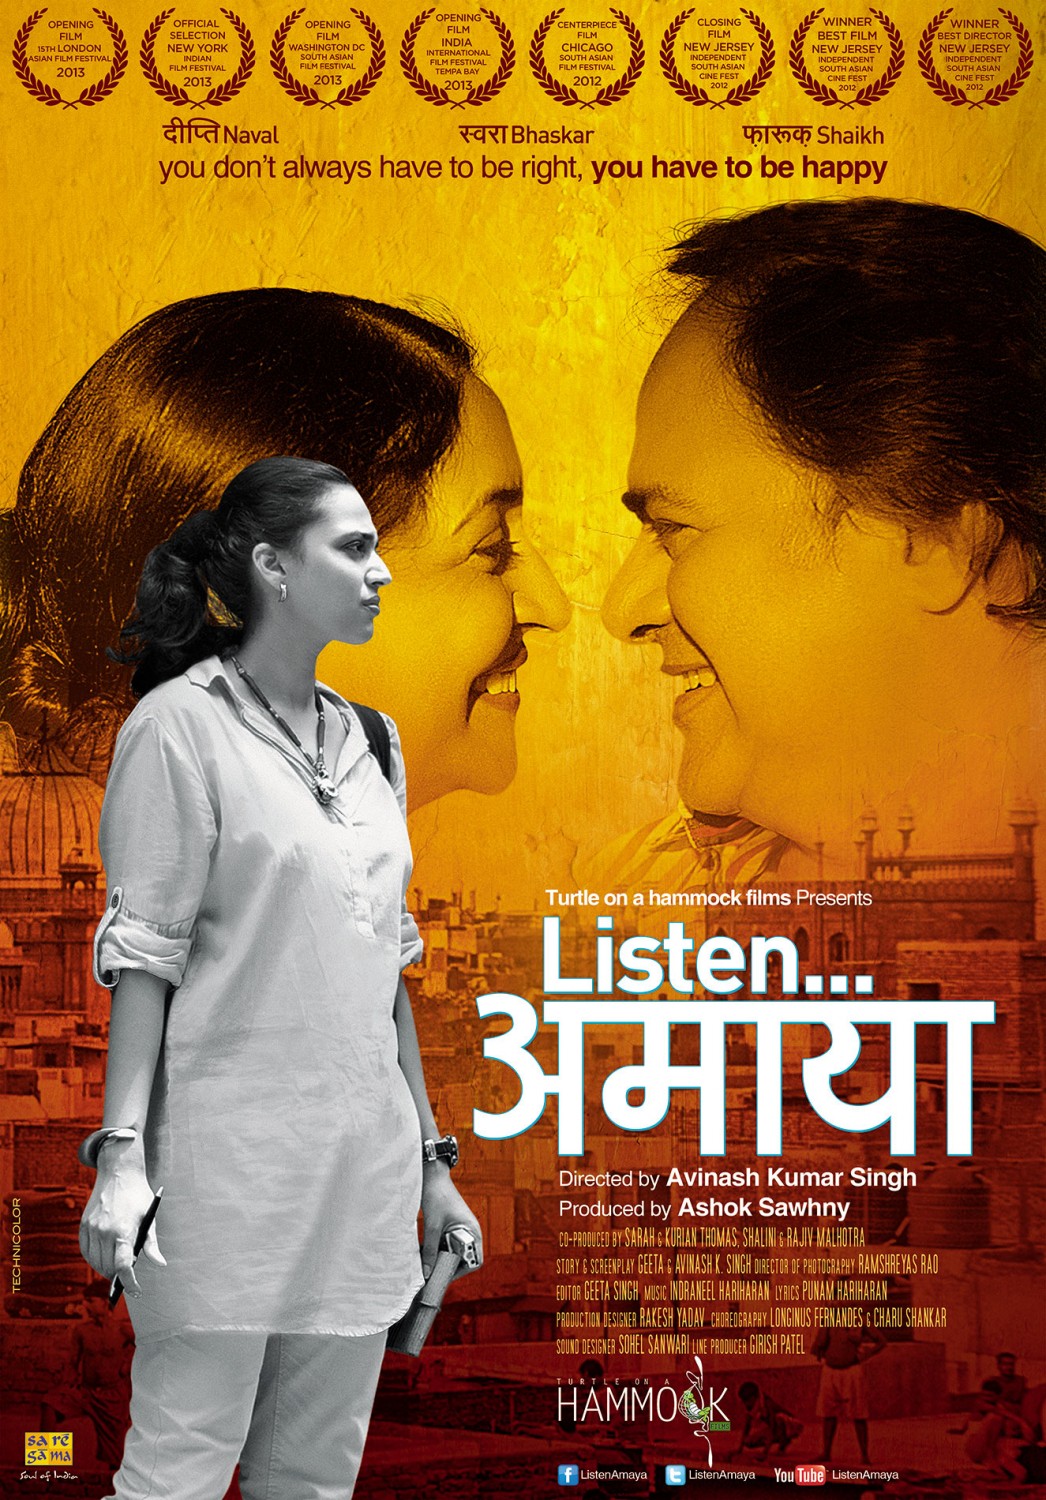 Extra Large Movie Poster Image for Listen Amaya